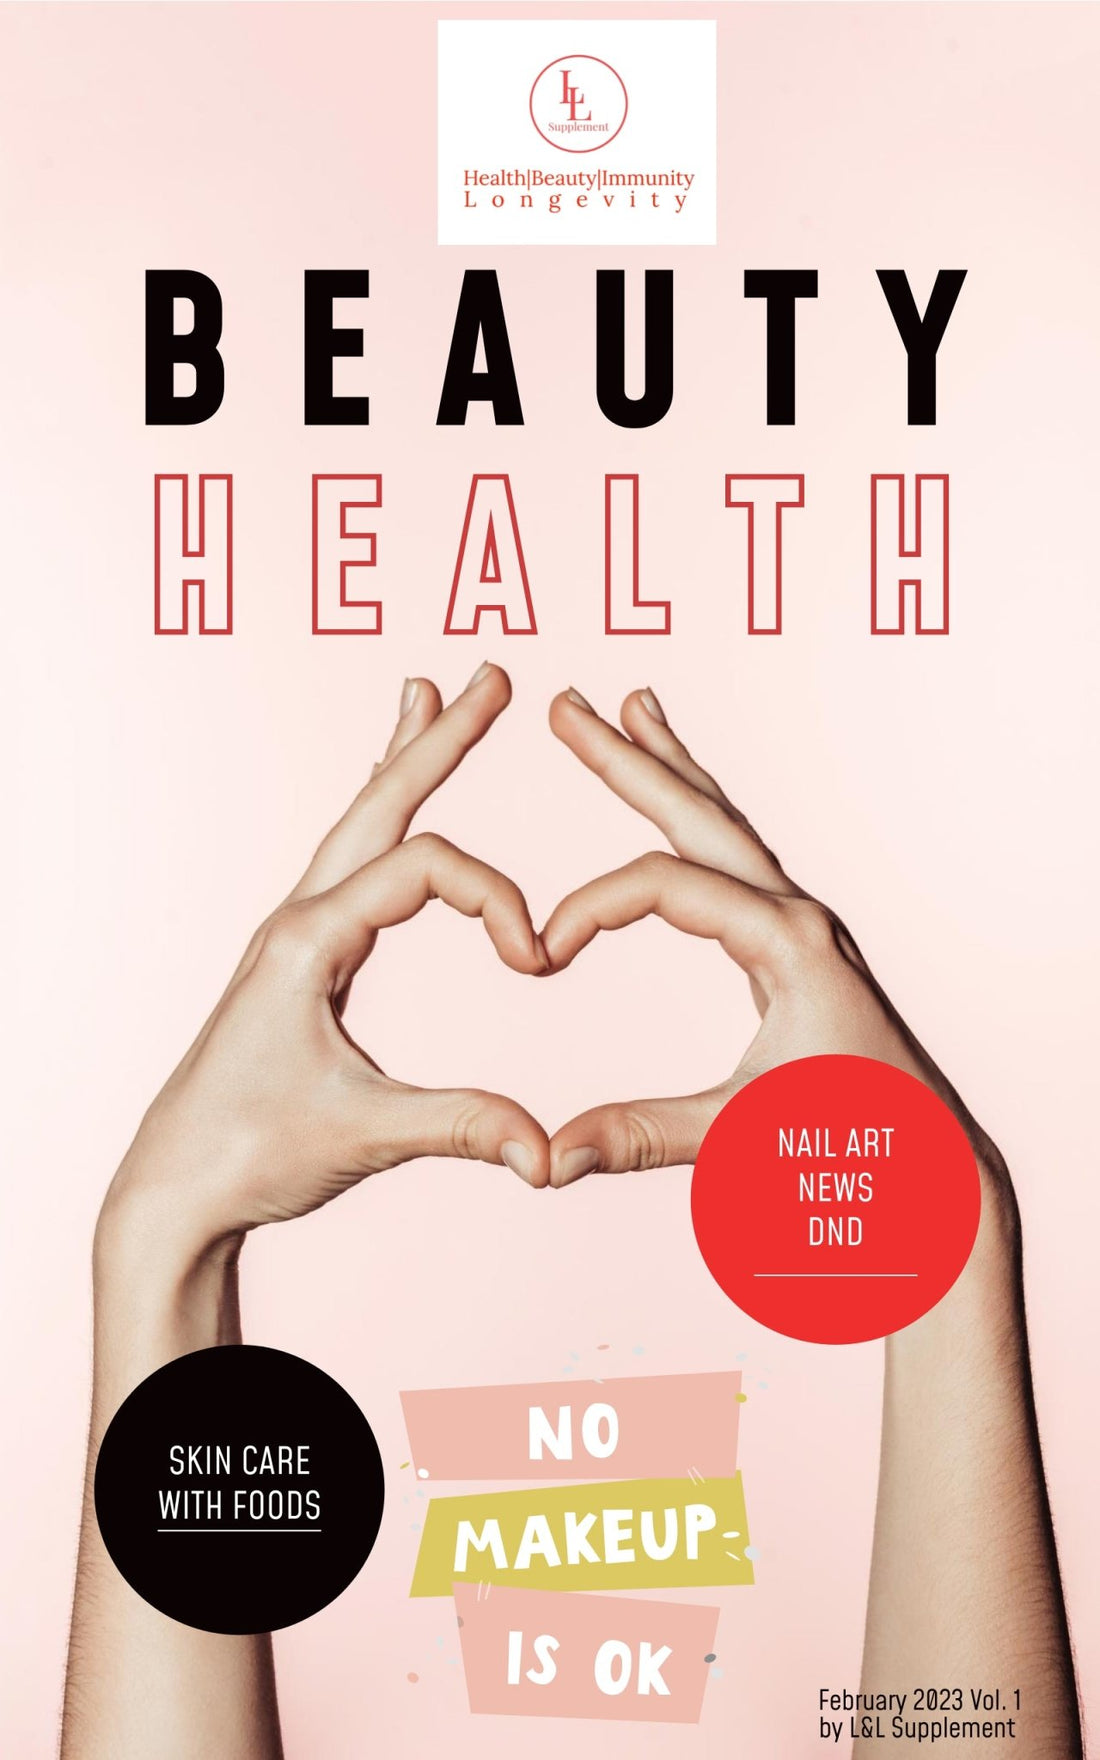 Health Beauty Skin Care & More - L & L Supplement LLC